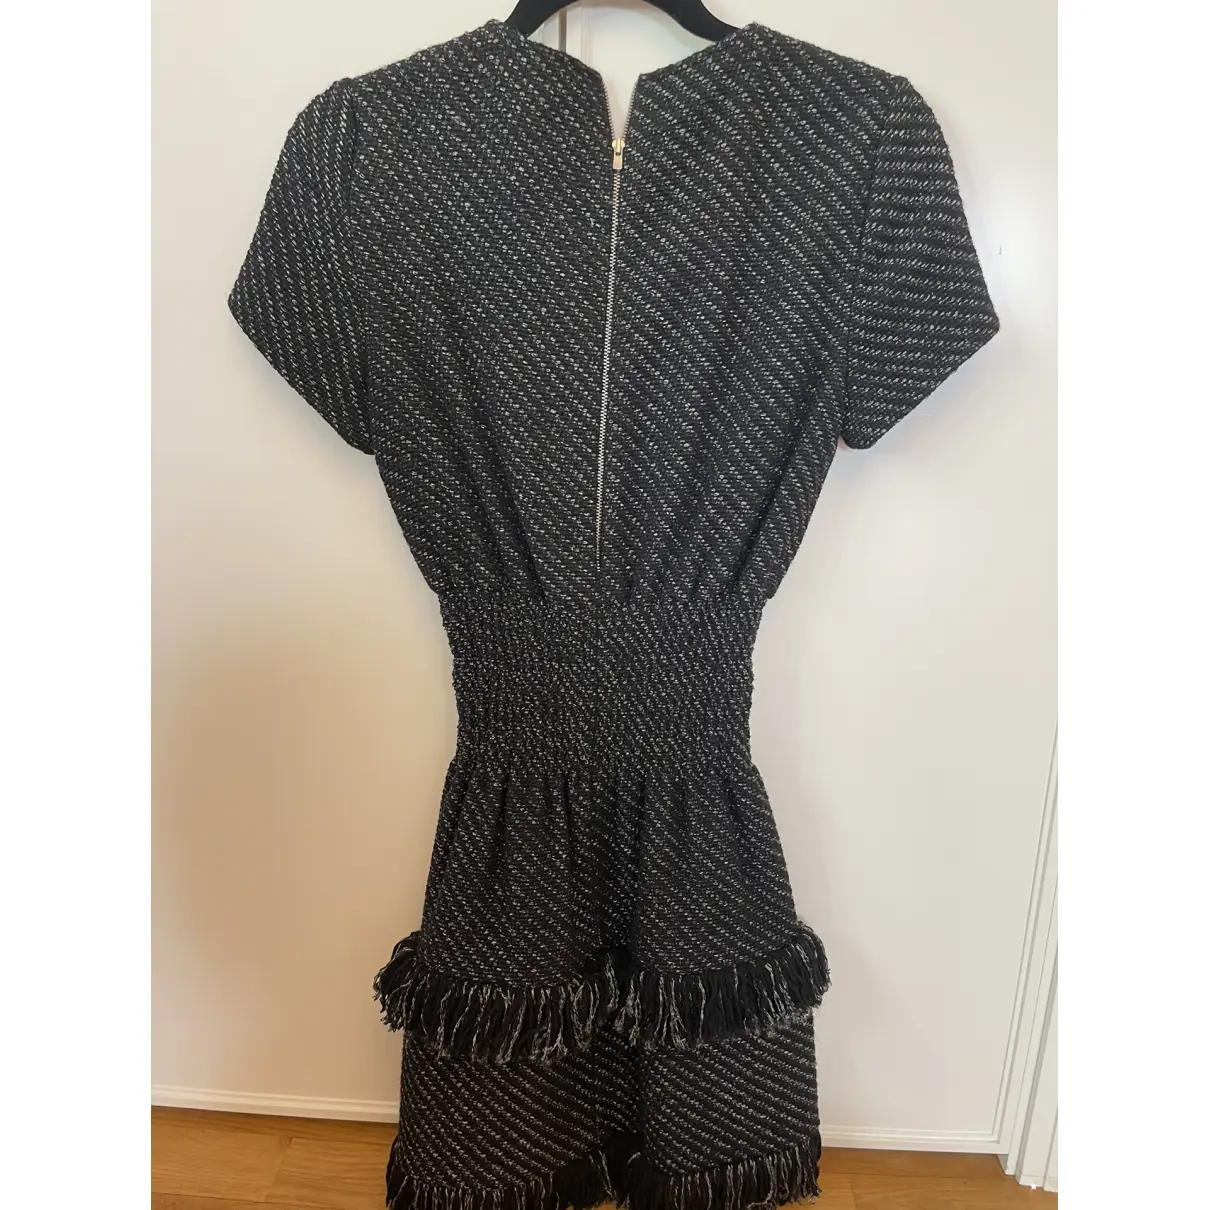 Buy Maje Fall Winter 2019 tweed mini dress online